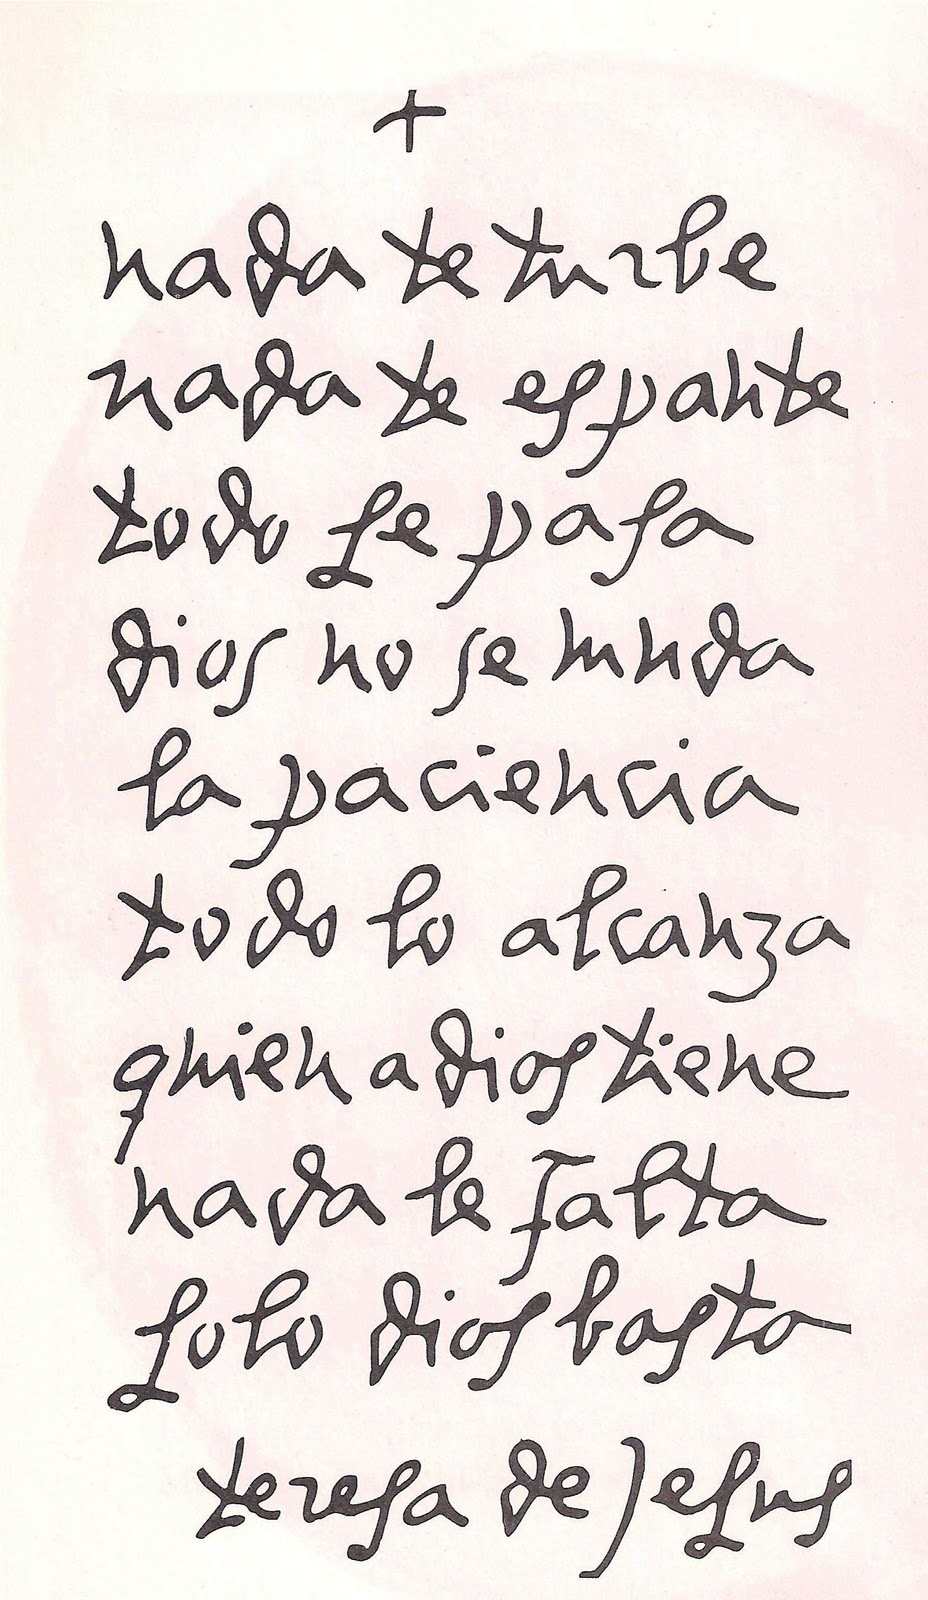 Nada Te Turbe: A Poem by St. Teresa of Avila